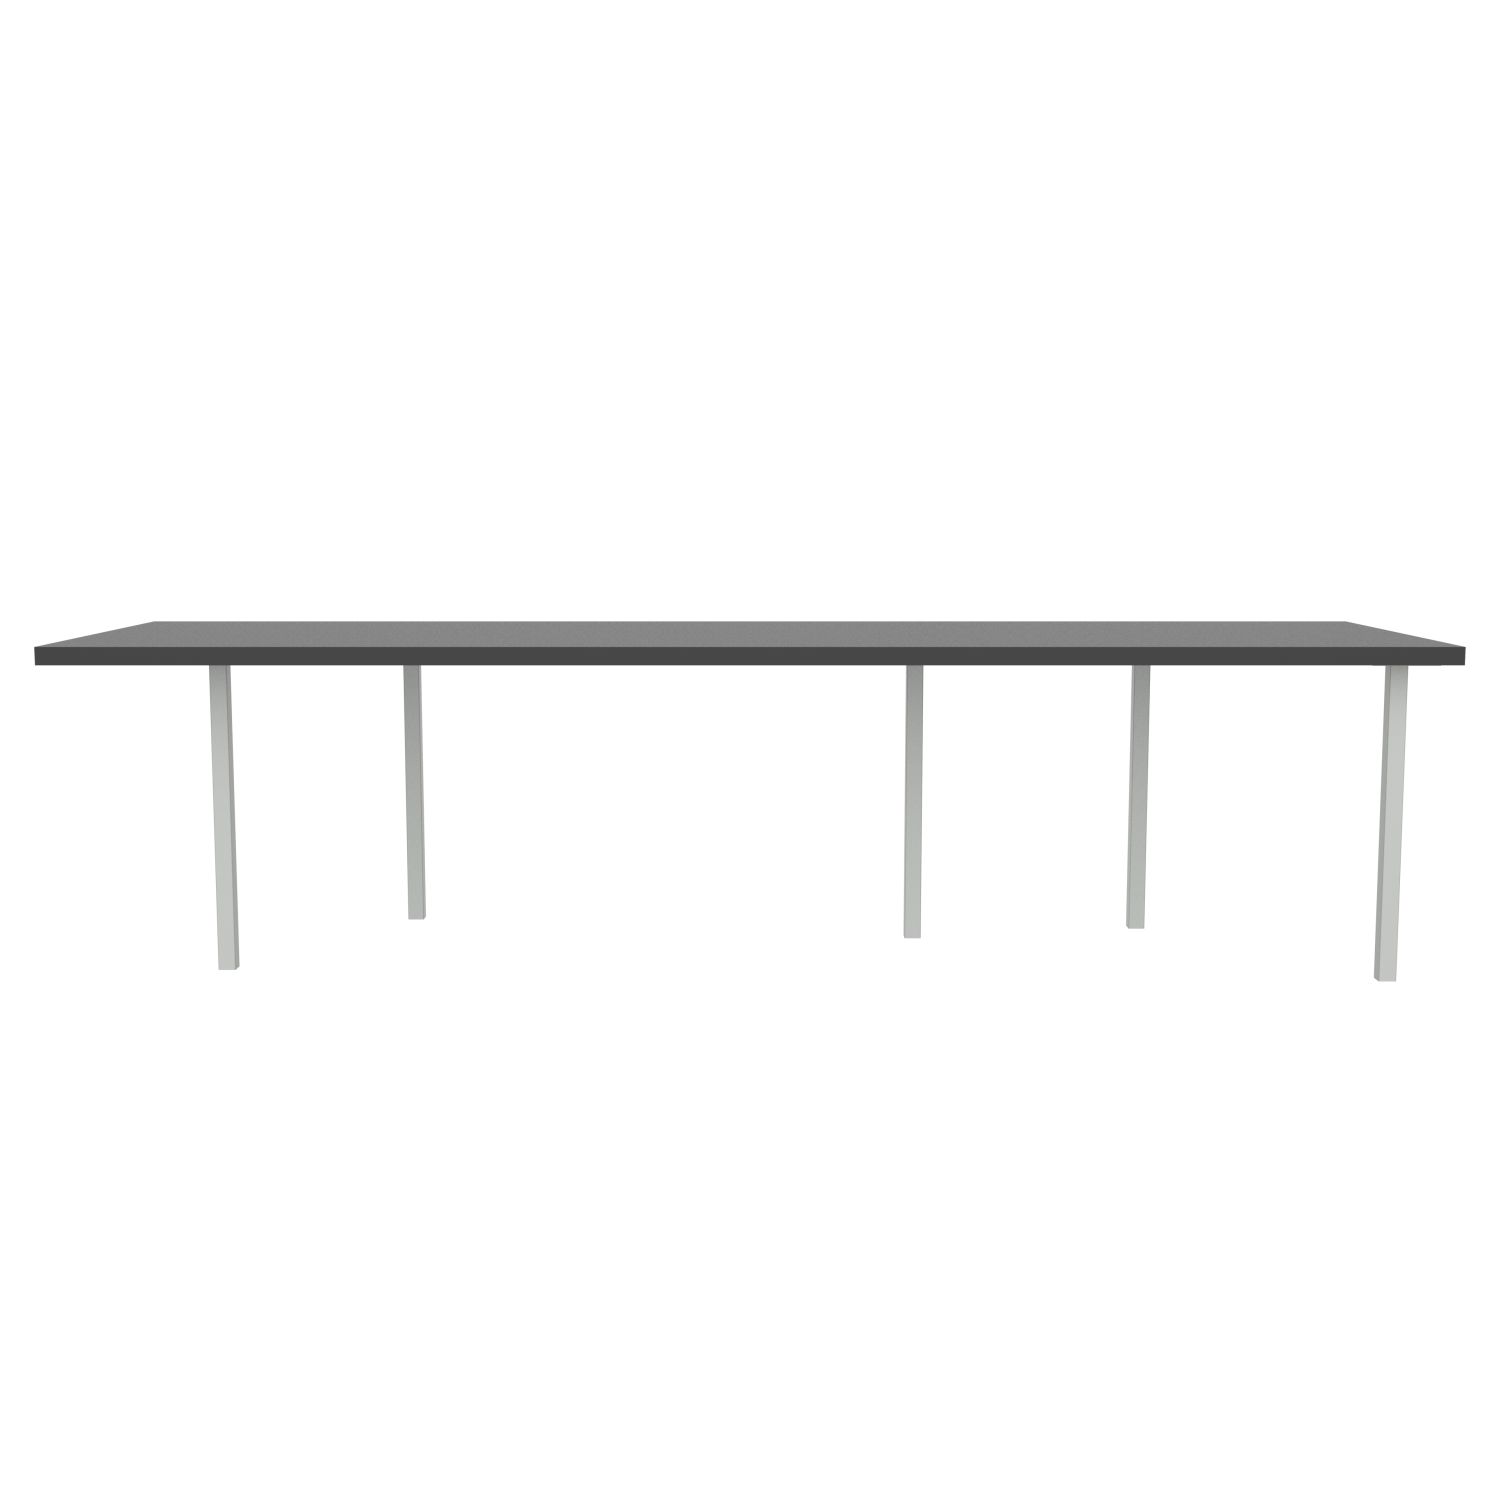 lensvelt bbrand table five fixed heigt 915x310 hpl black 50 mm price level 1 light grey ral7035